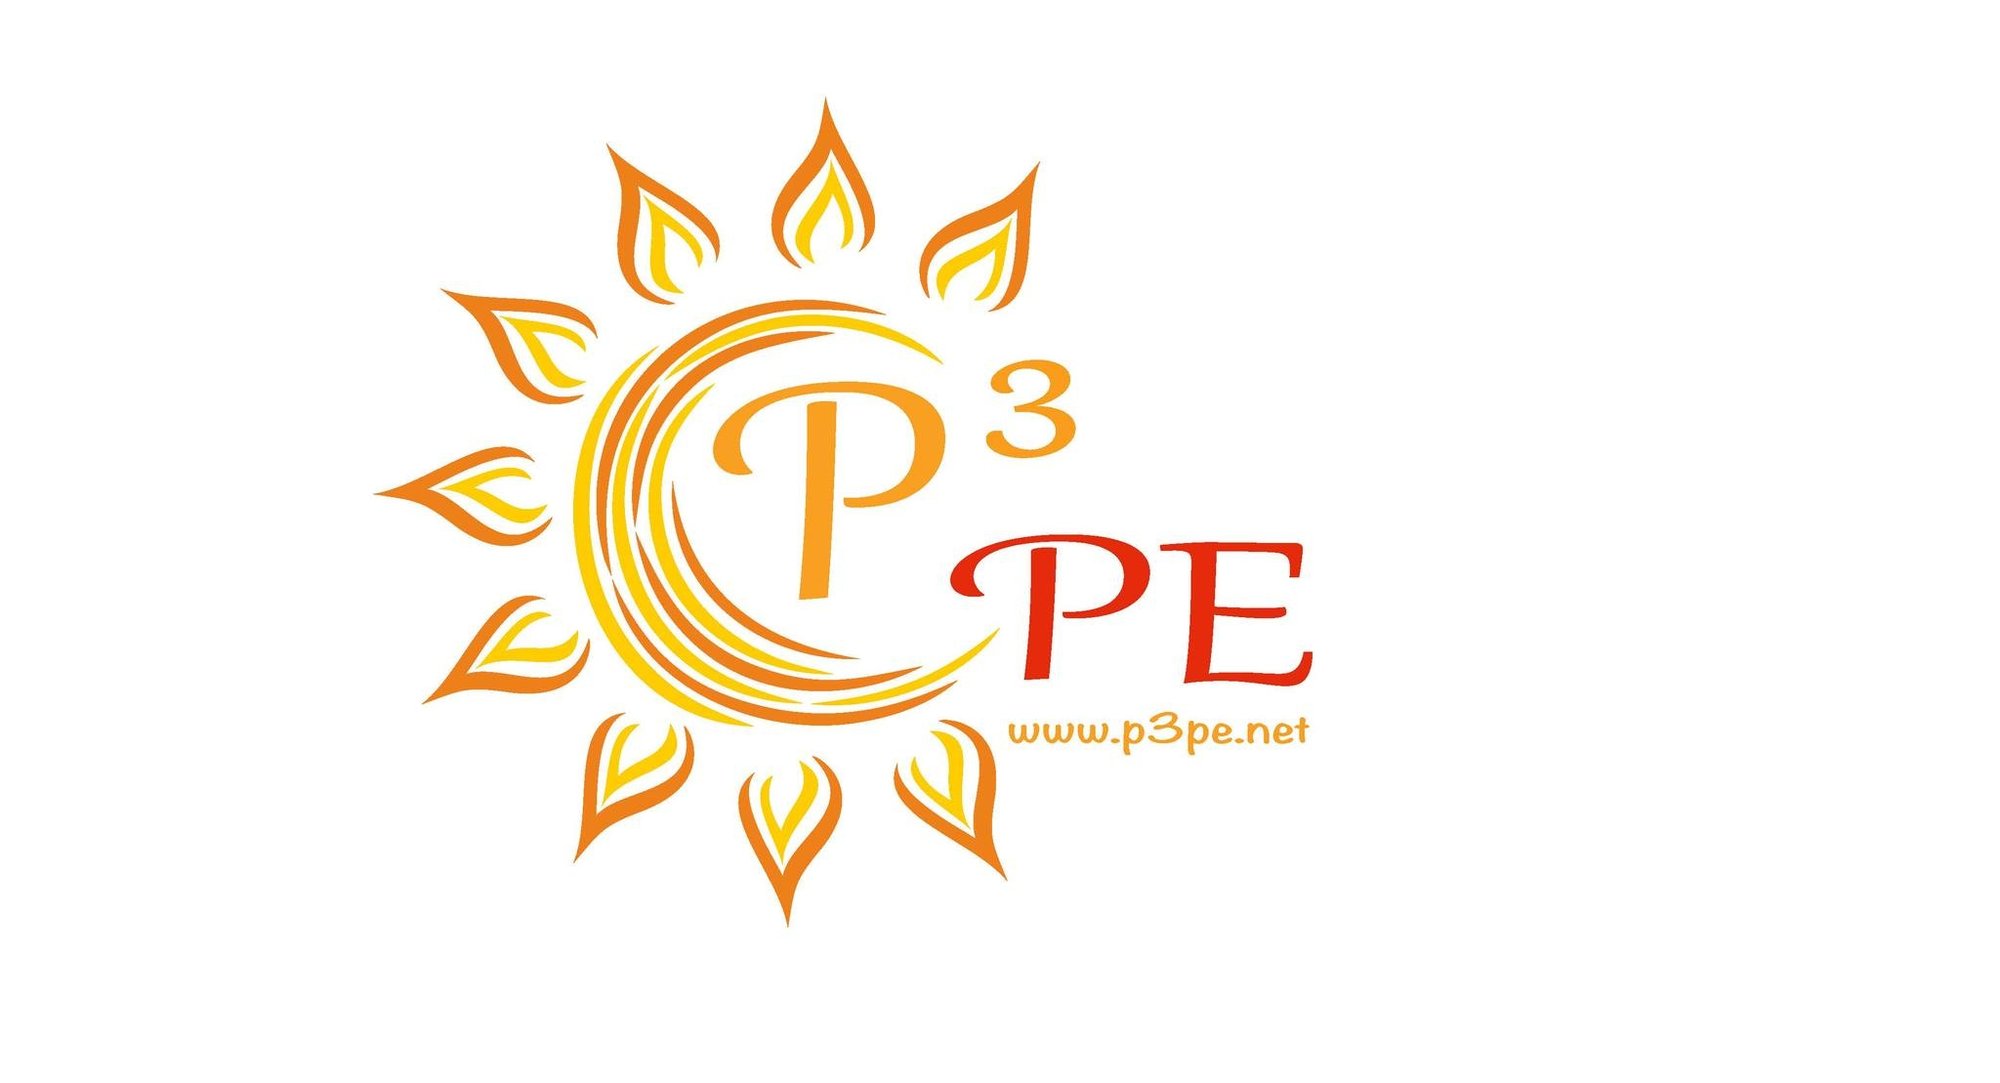 P3PE logo summer camps